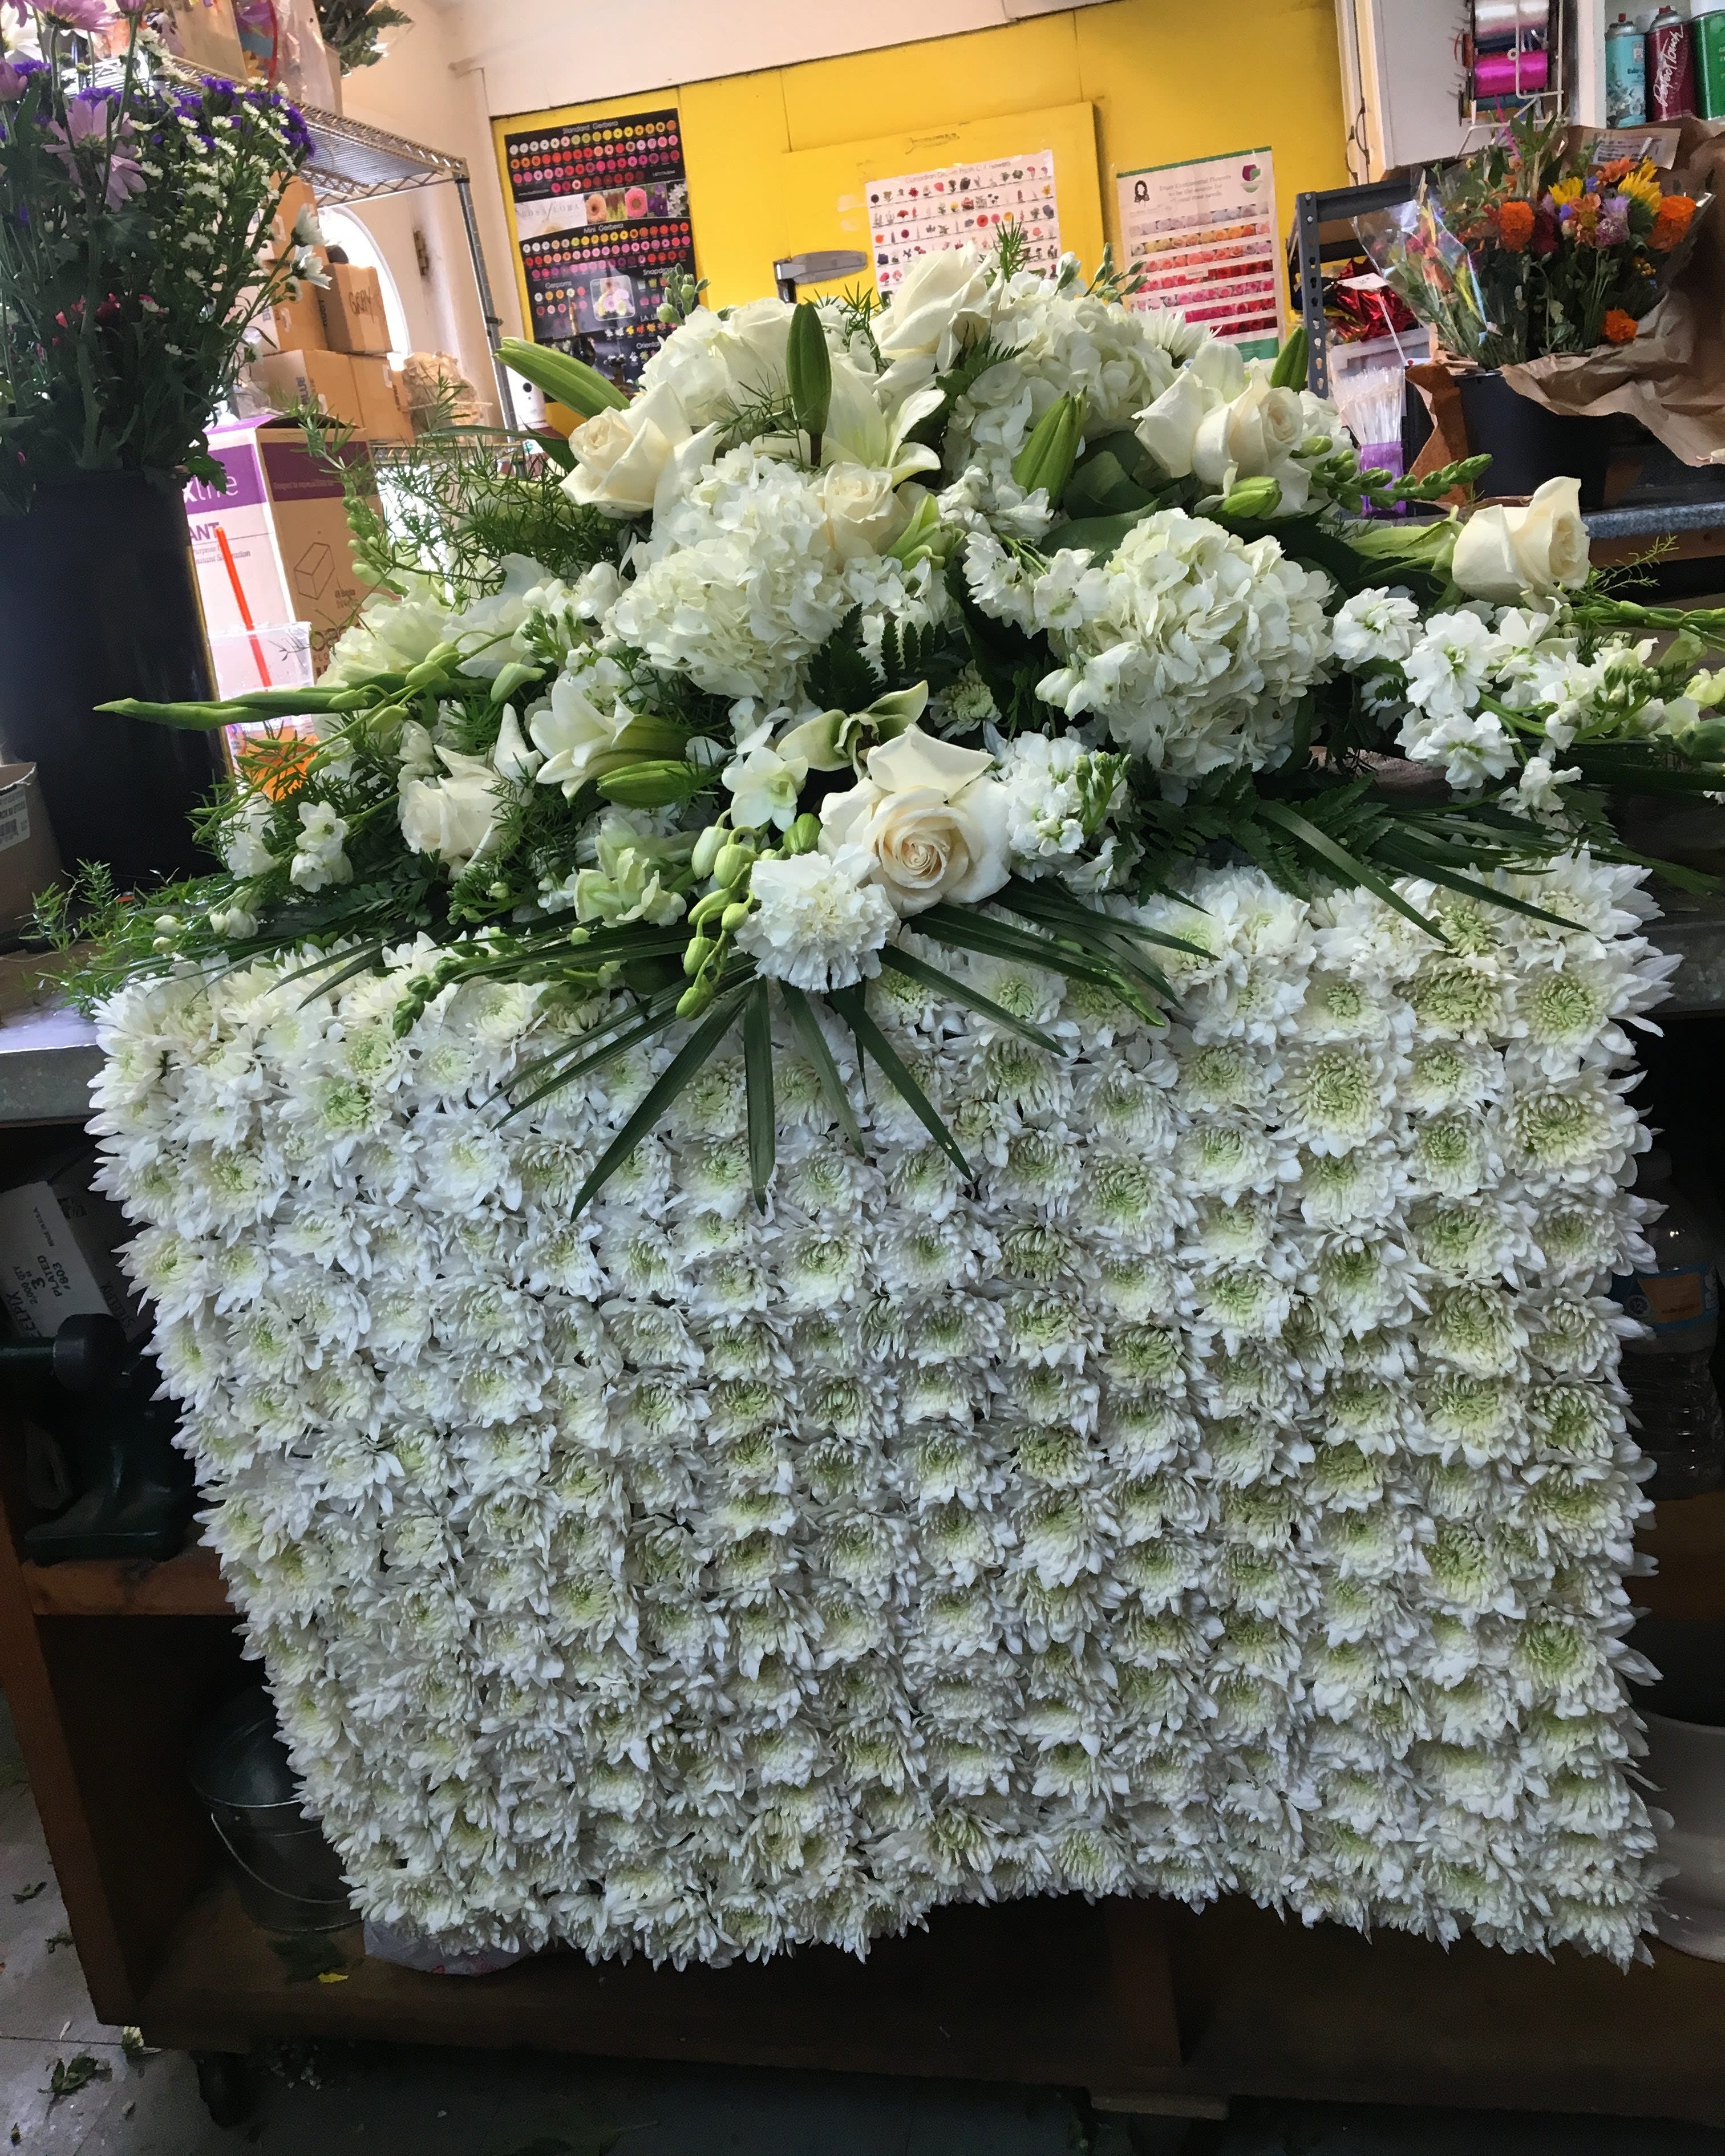 Elegant White Casket Spray with Blanket - A beautiful elegant casket spray with a blanket draped over the casket